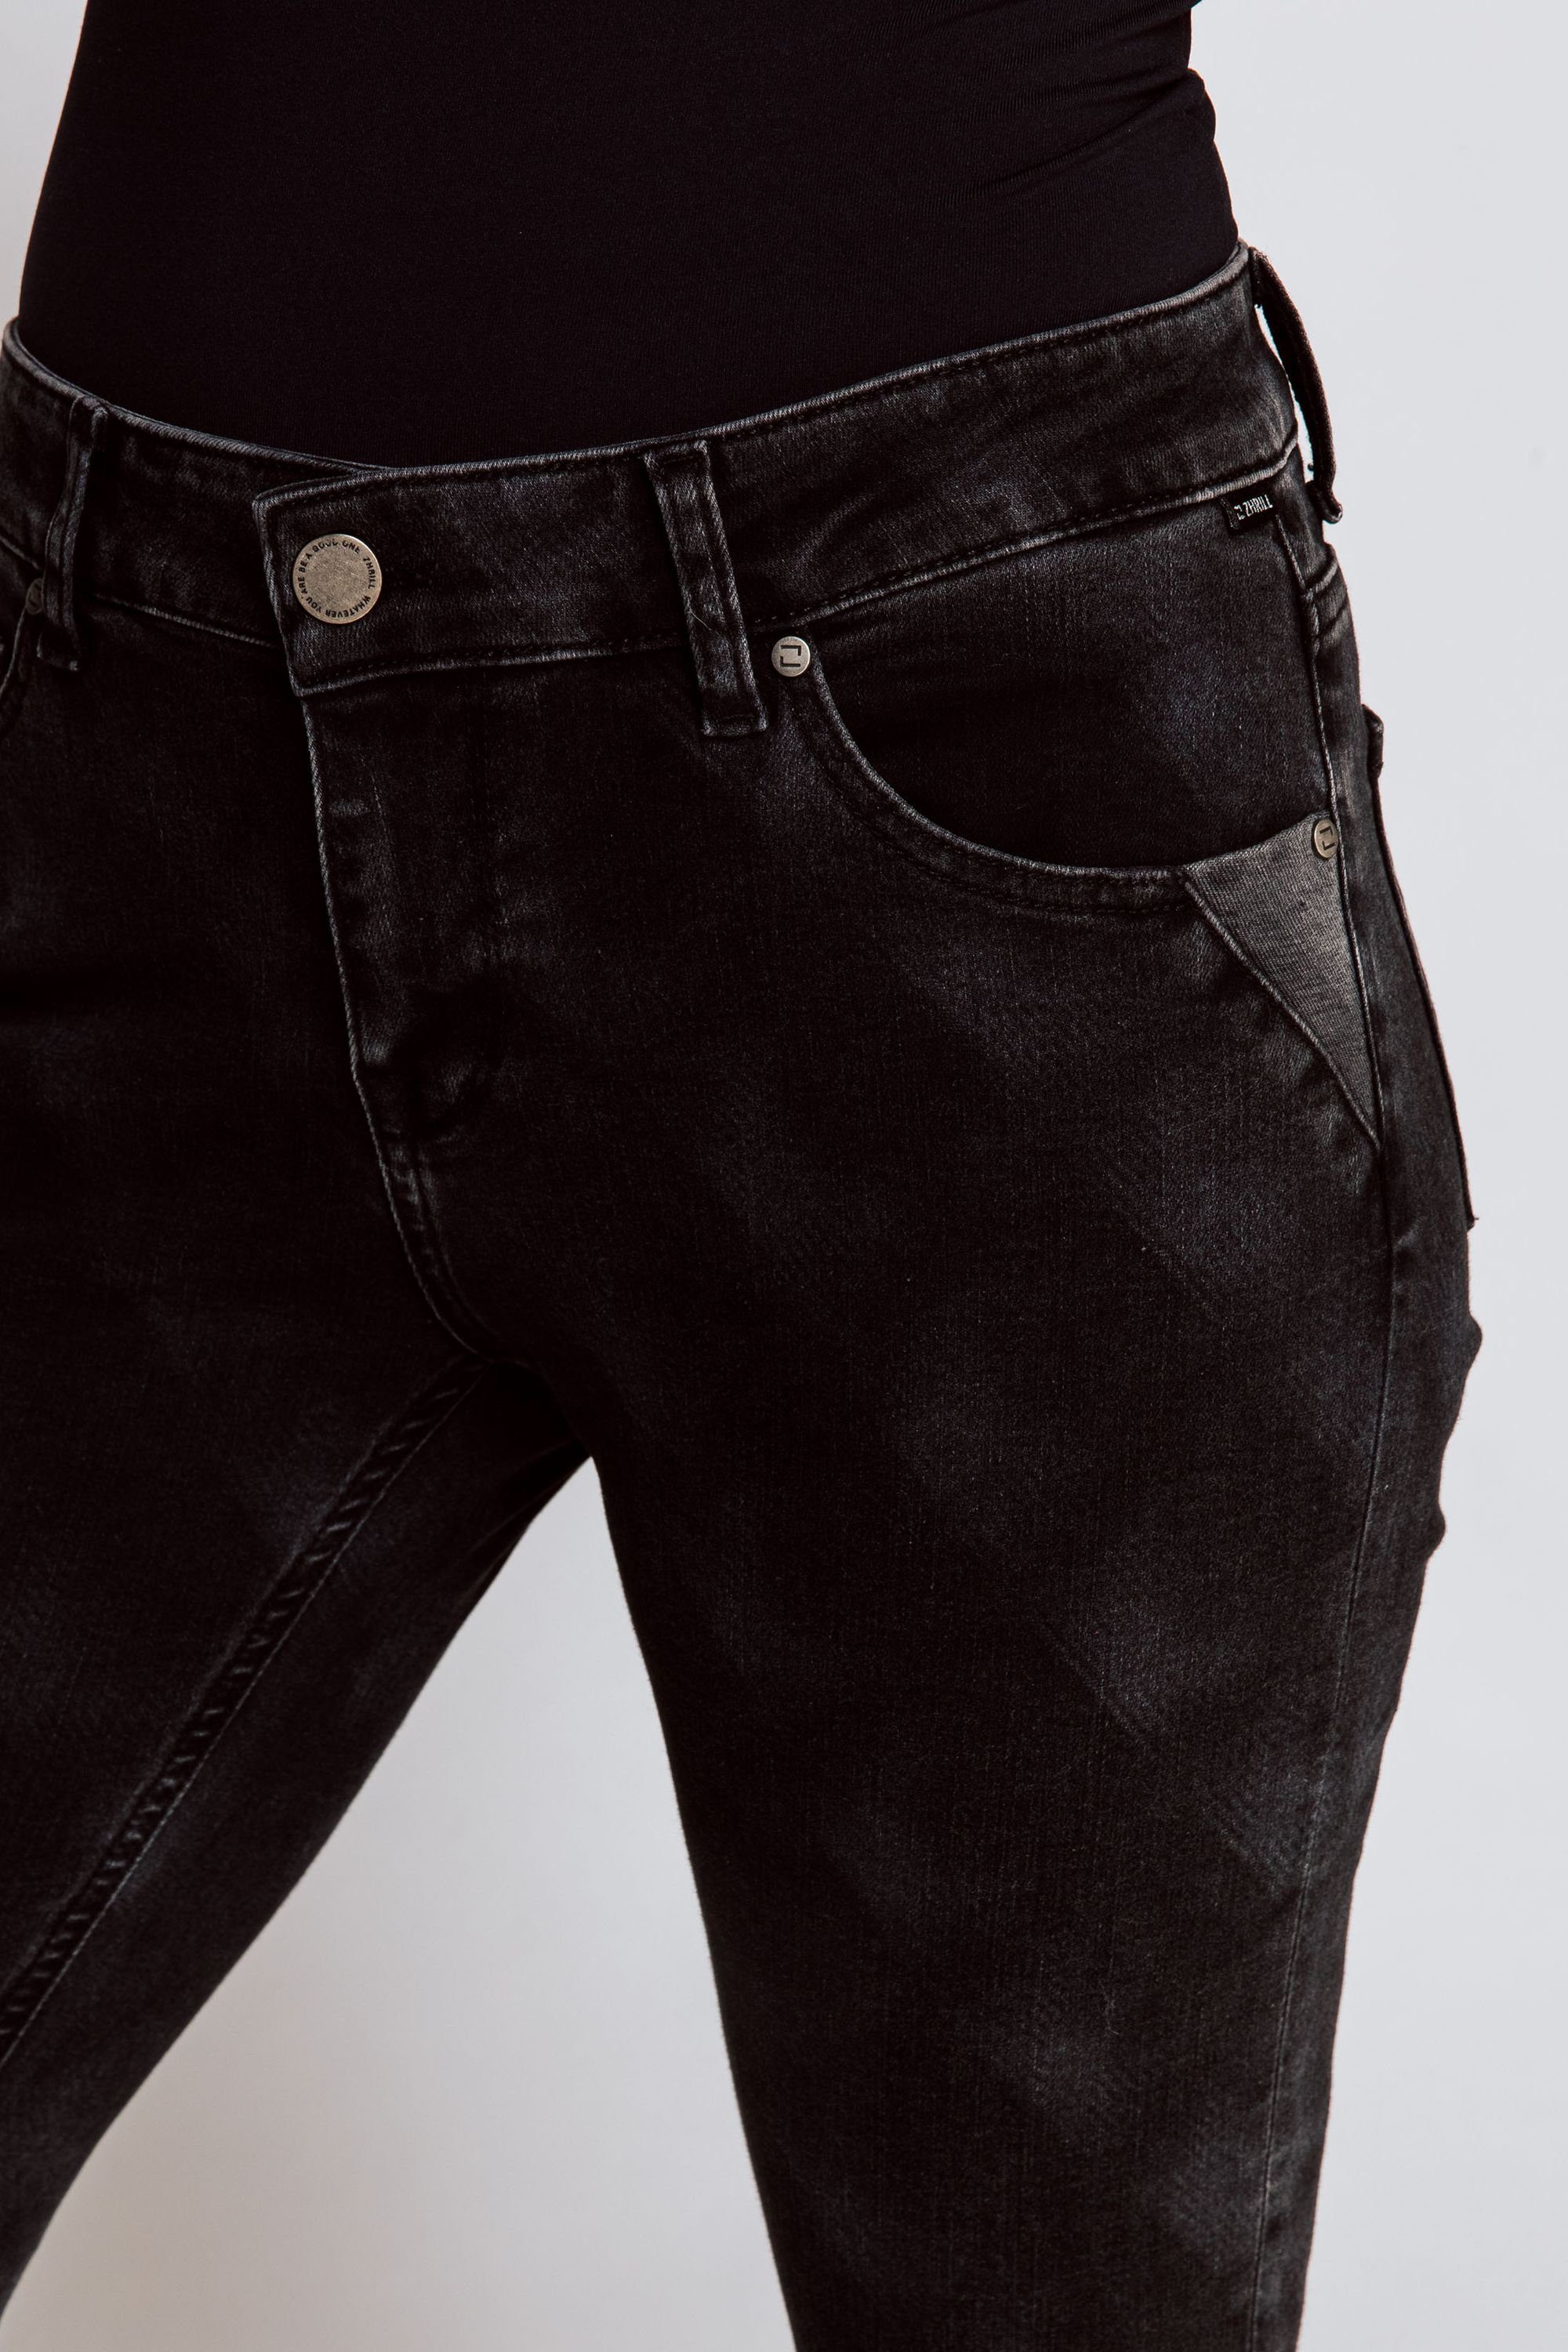 Black Tragekomfort Jeans Zhrill angenehmer NOVA Skinny-fit-Jeans Skinny